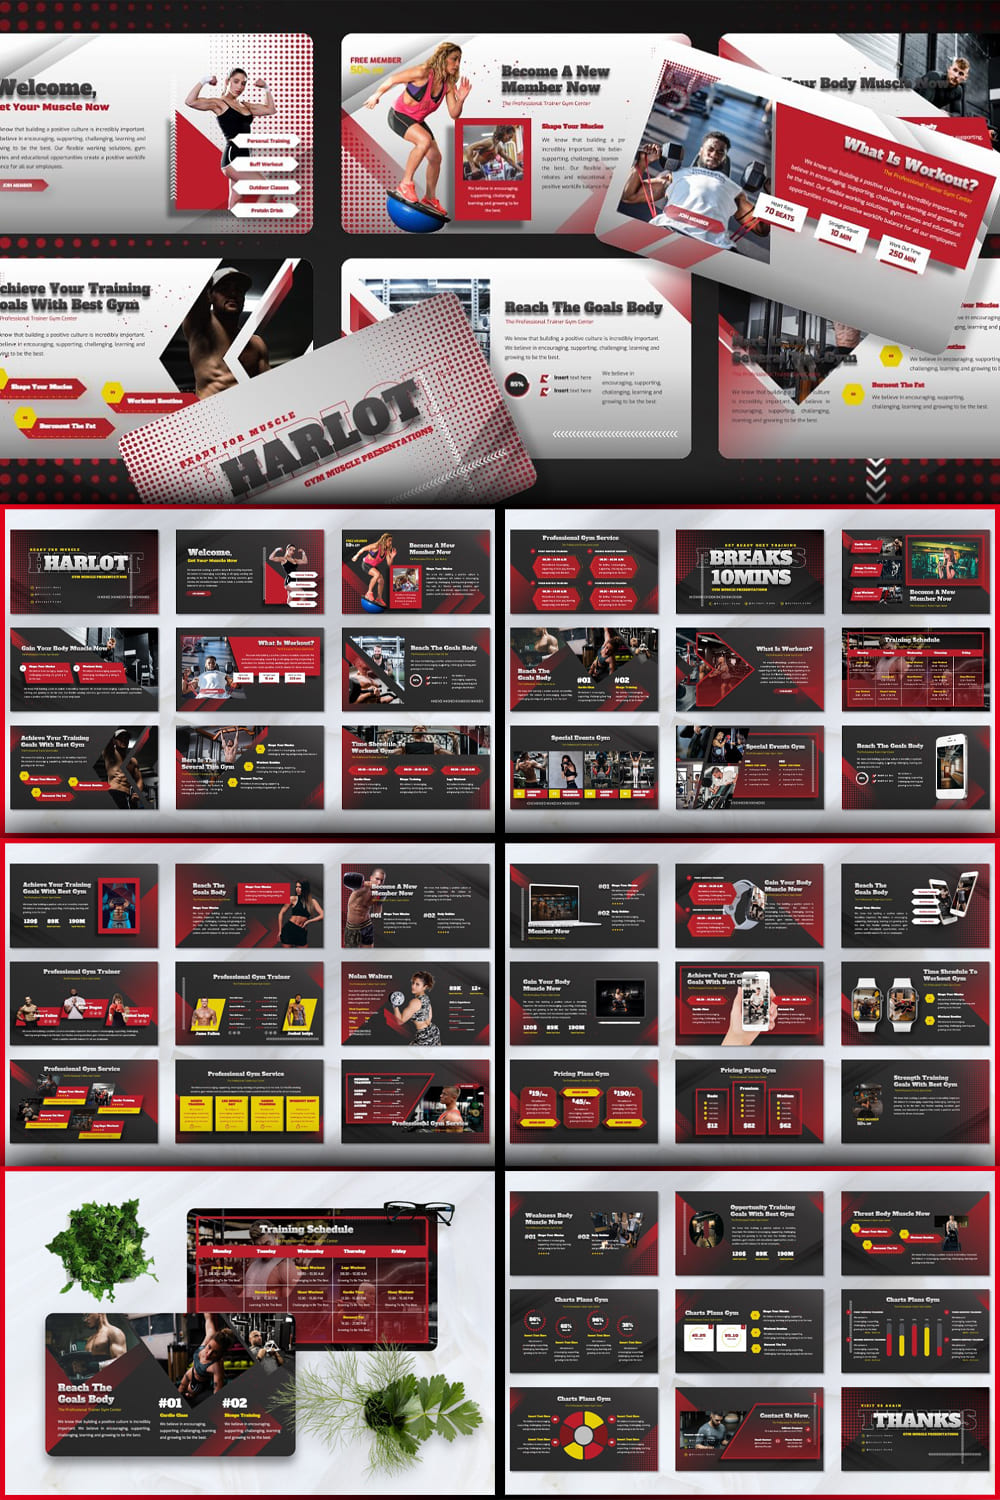 Harlot - Gym Muscle Google Slide pinterest image preview.